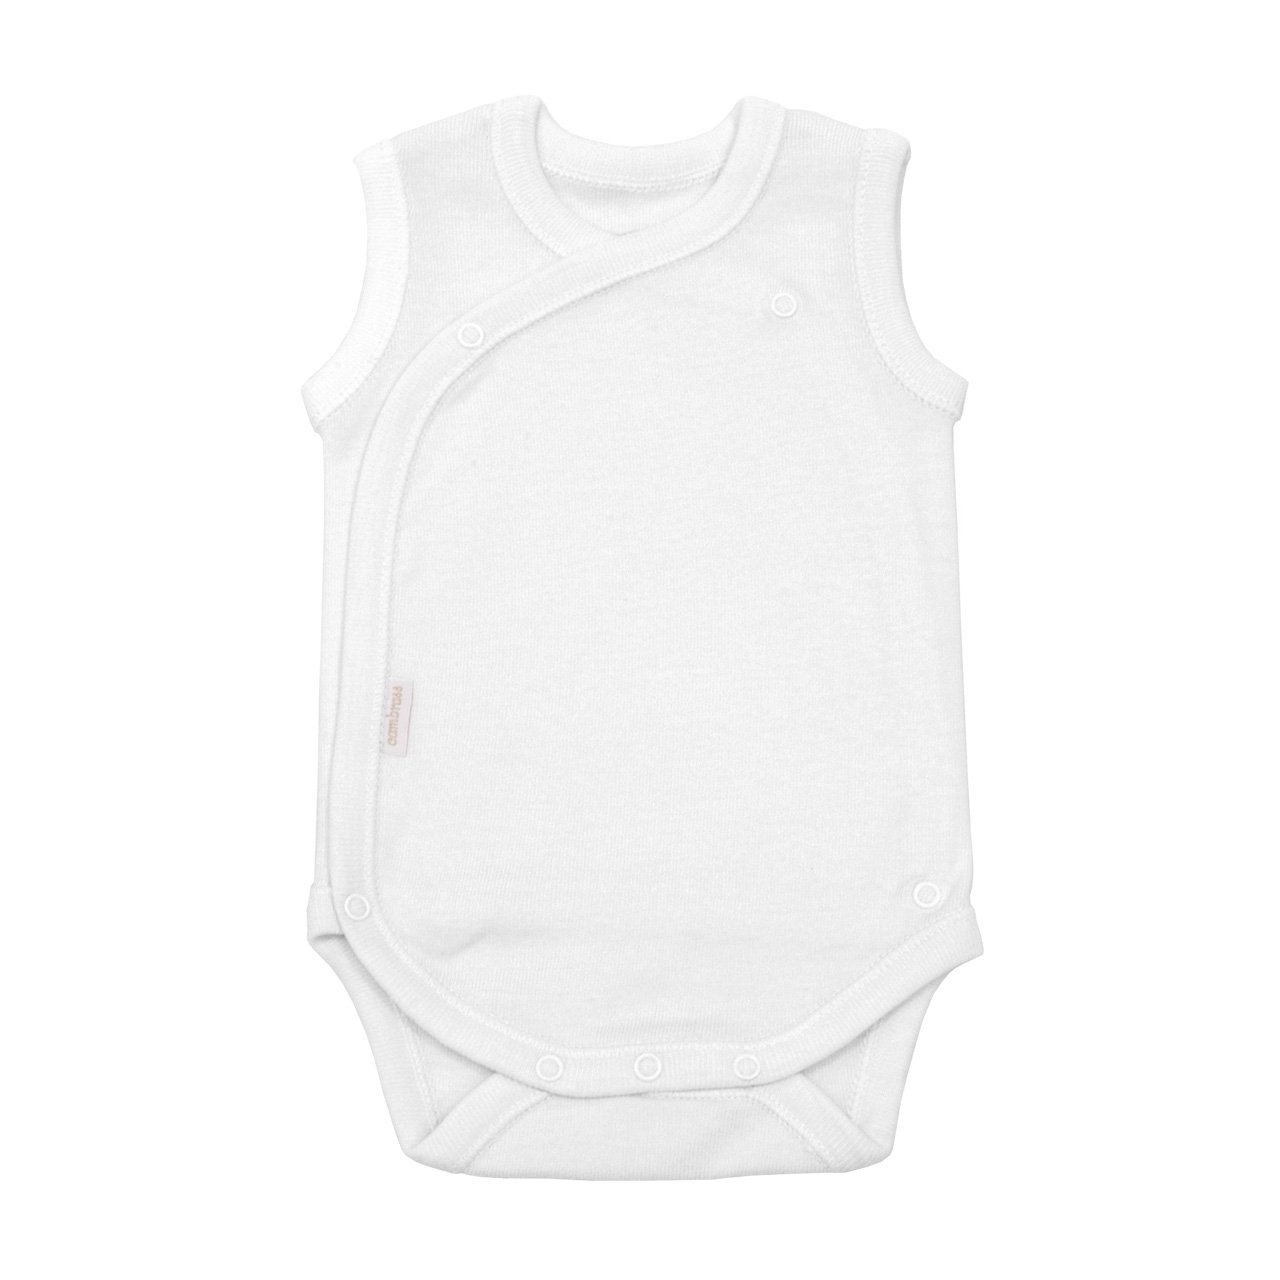 Cambrass Baby Bodysuit for Newborn (White) 62 cm White